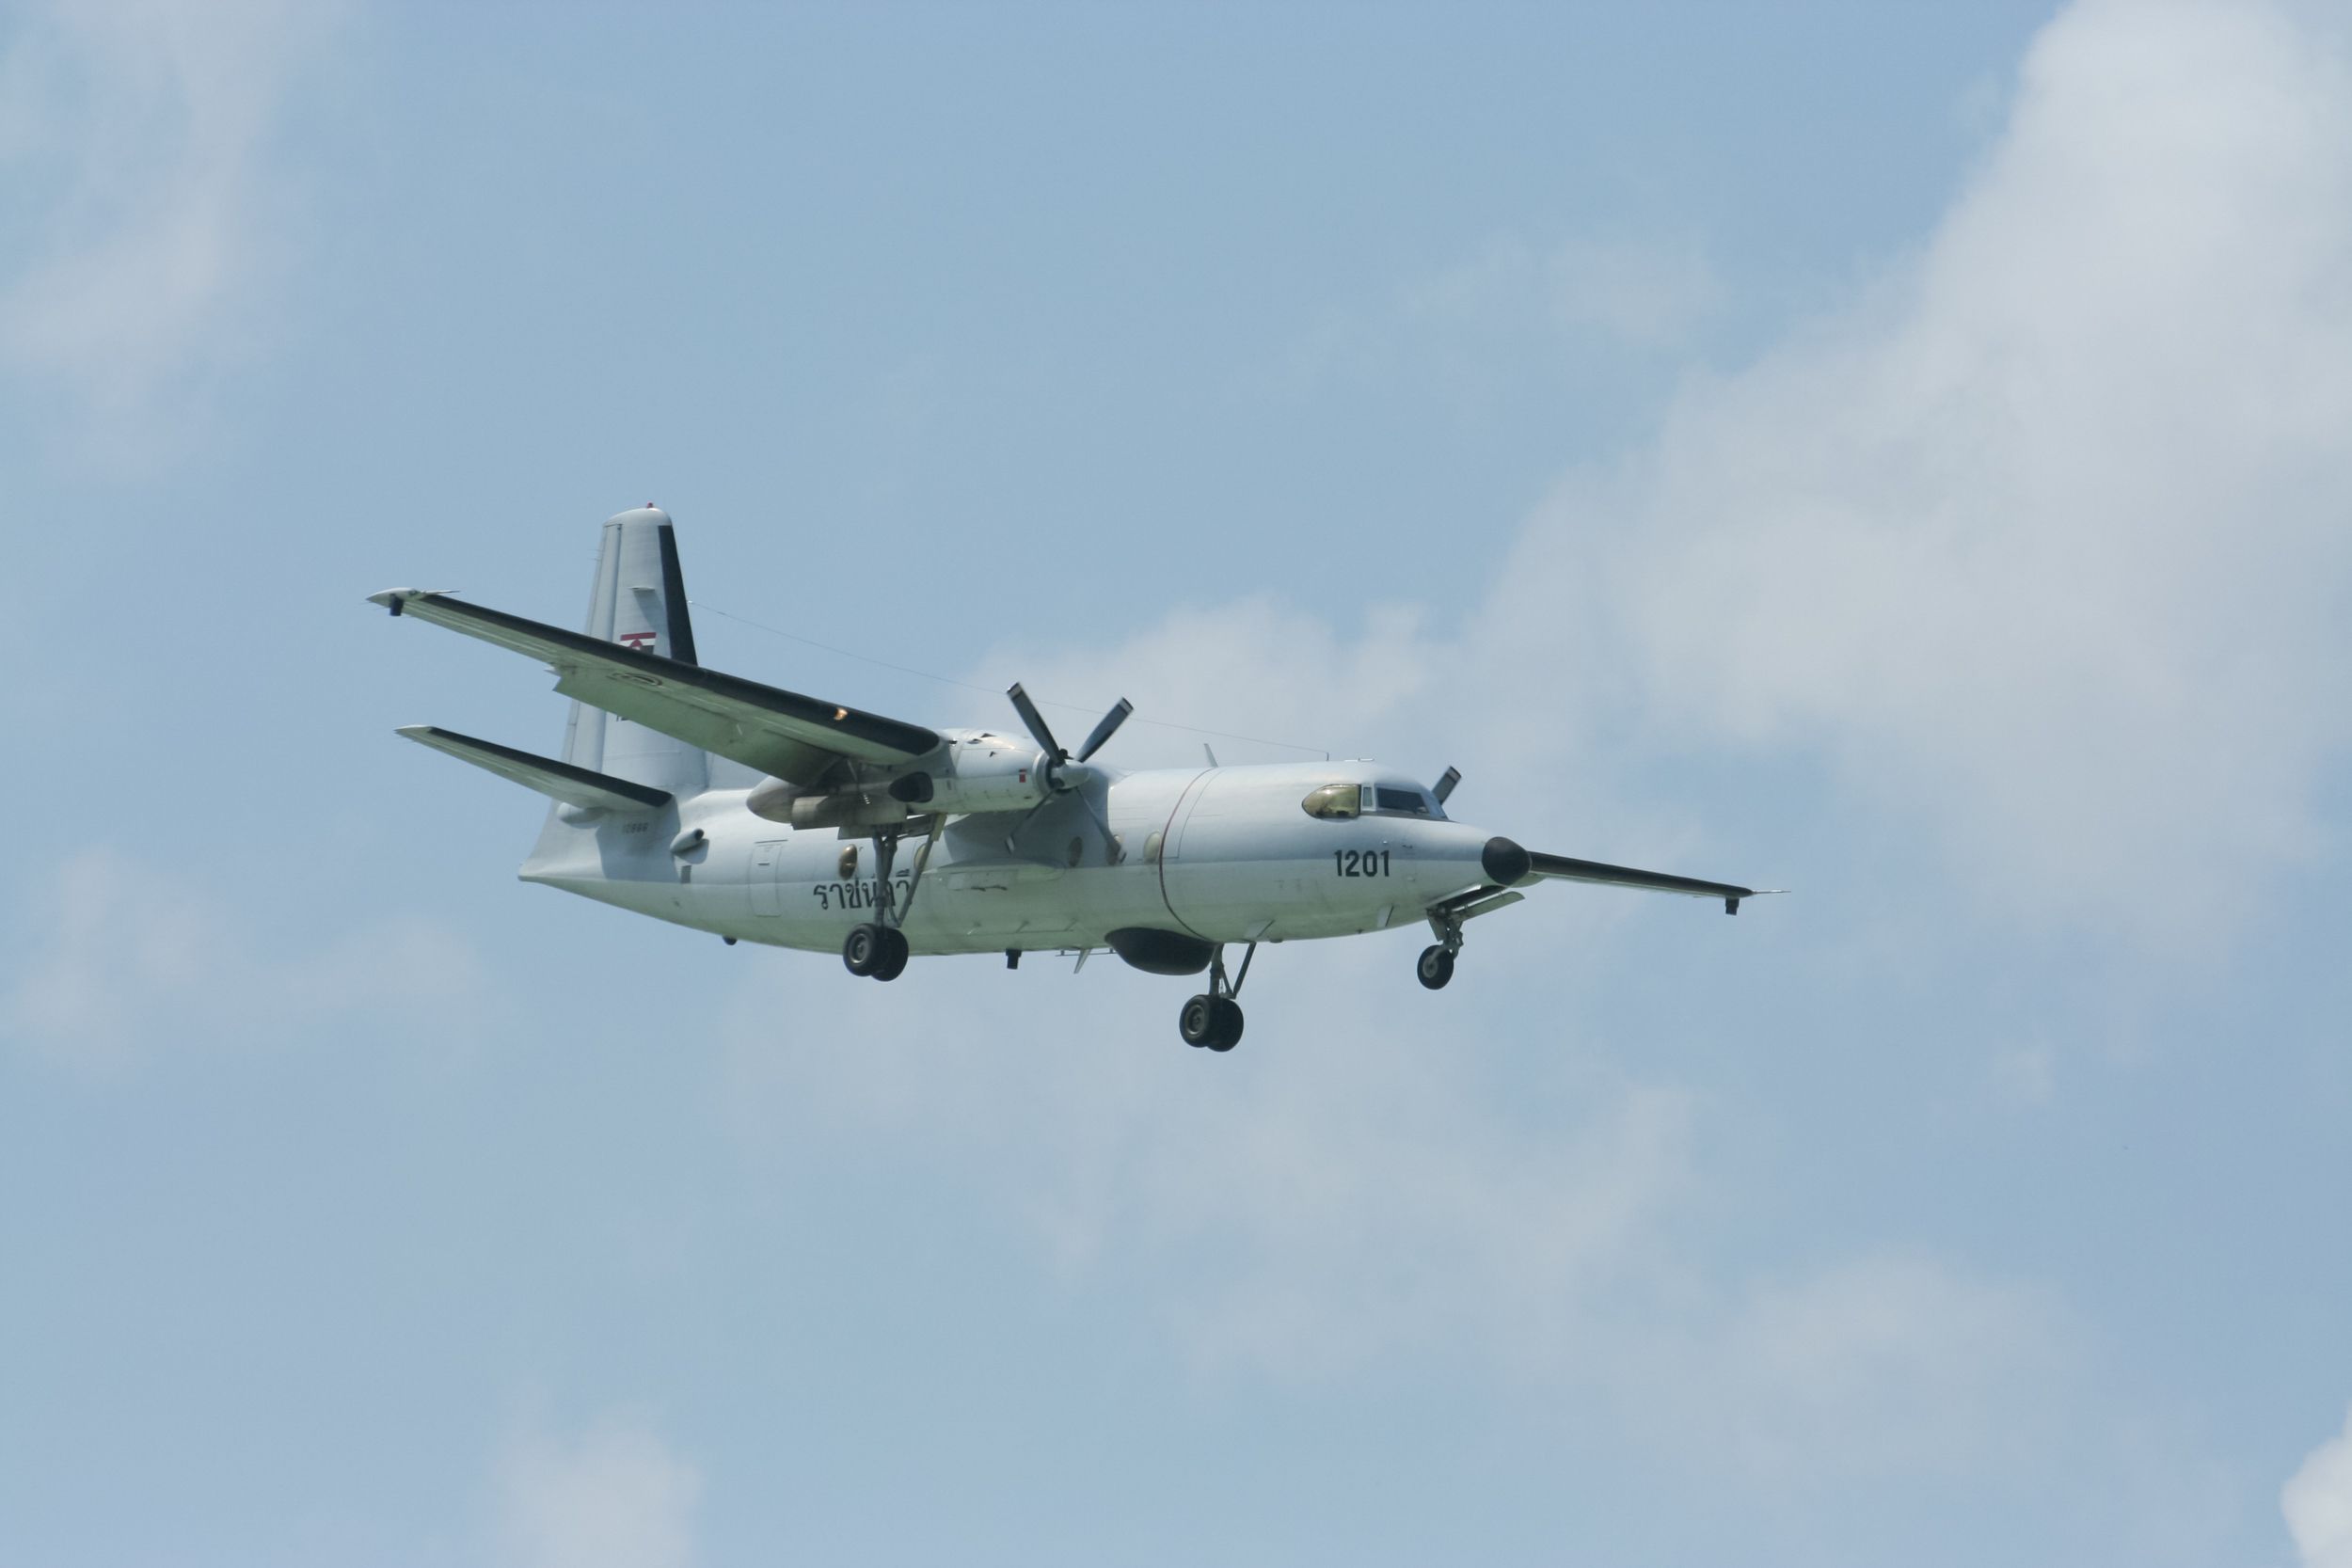 A Fokker F27 Prototype flying in the sky.